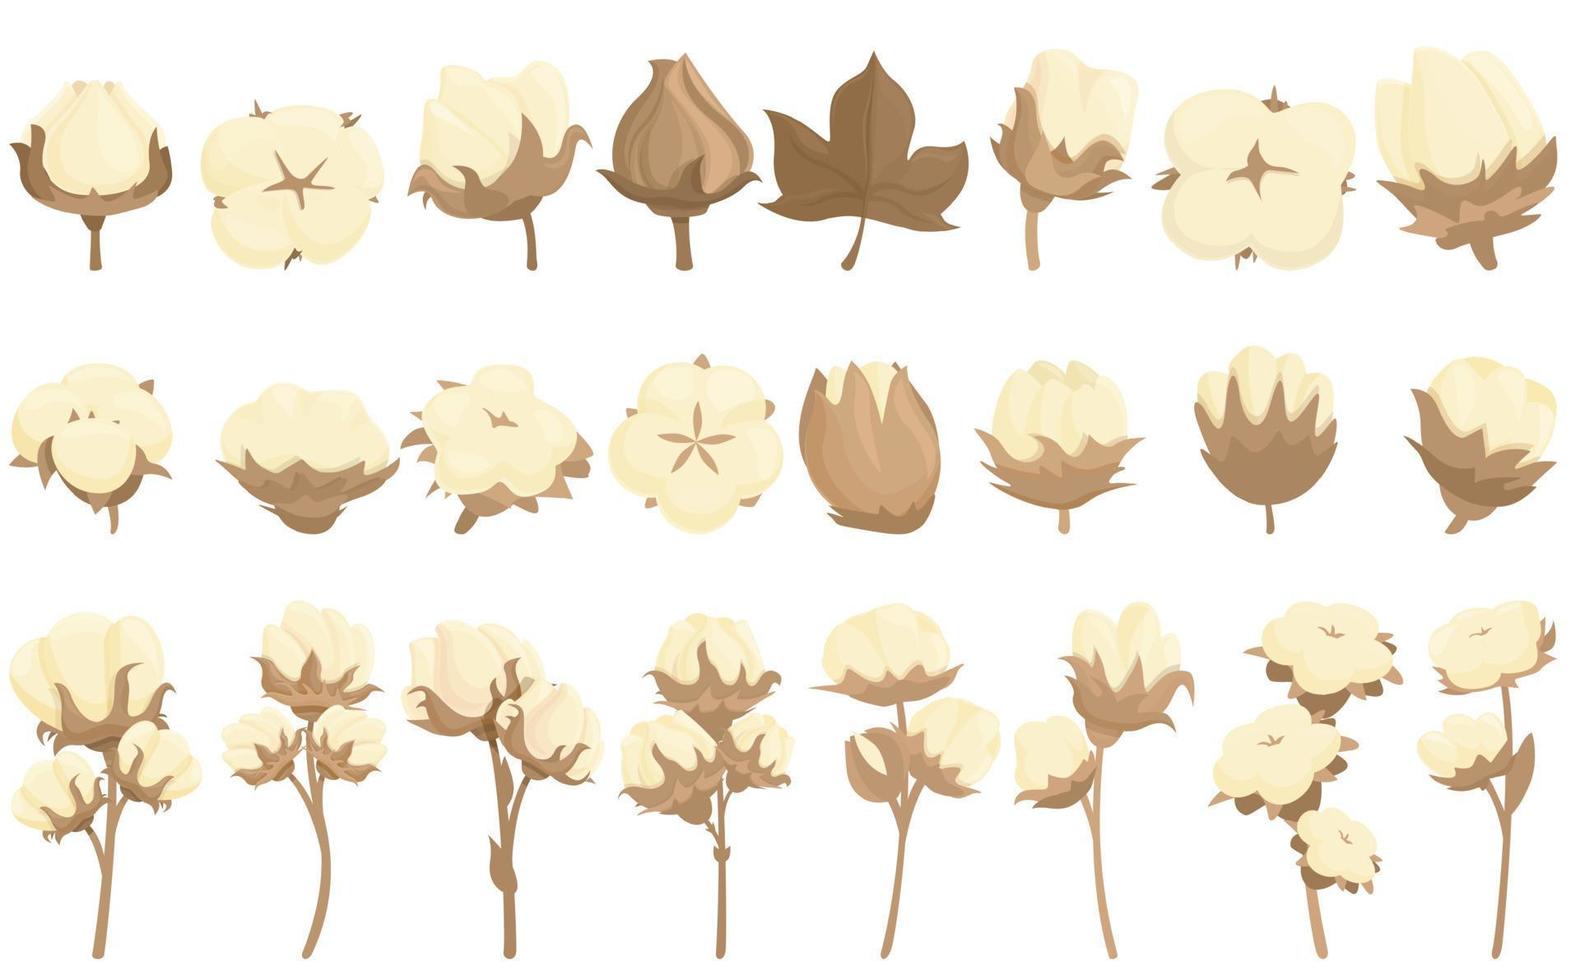 Cotton icons set cartoon vector. Fabric flower vector